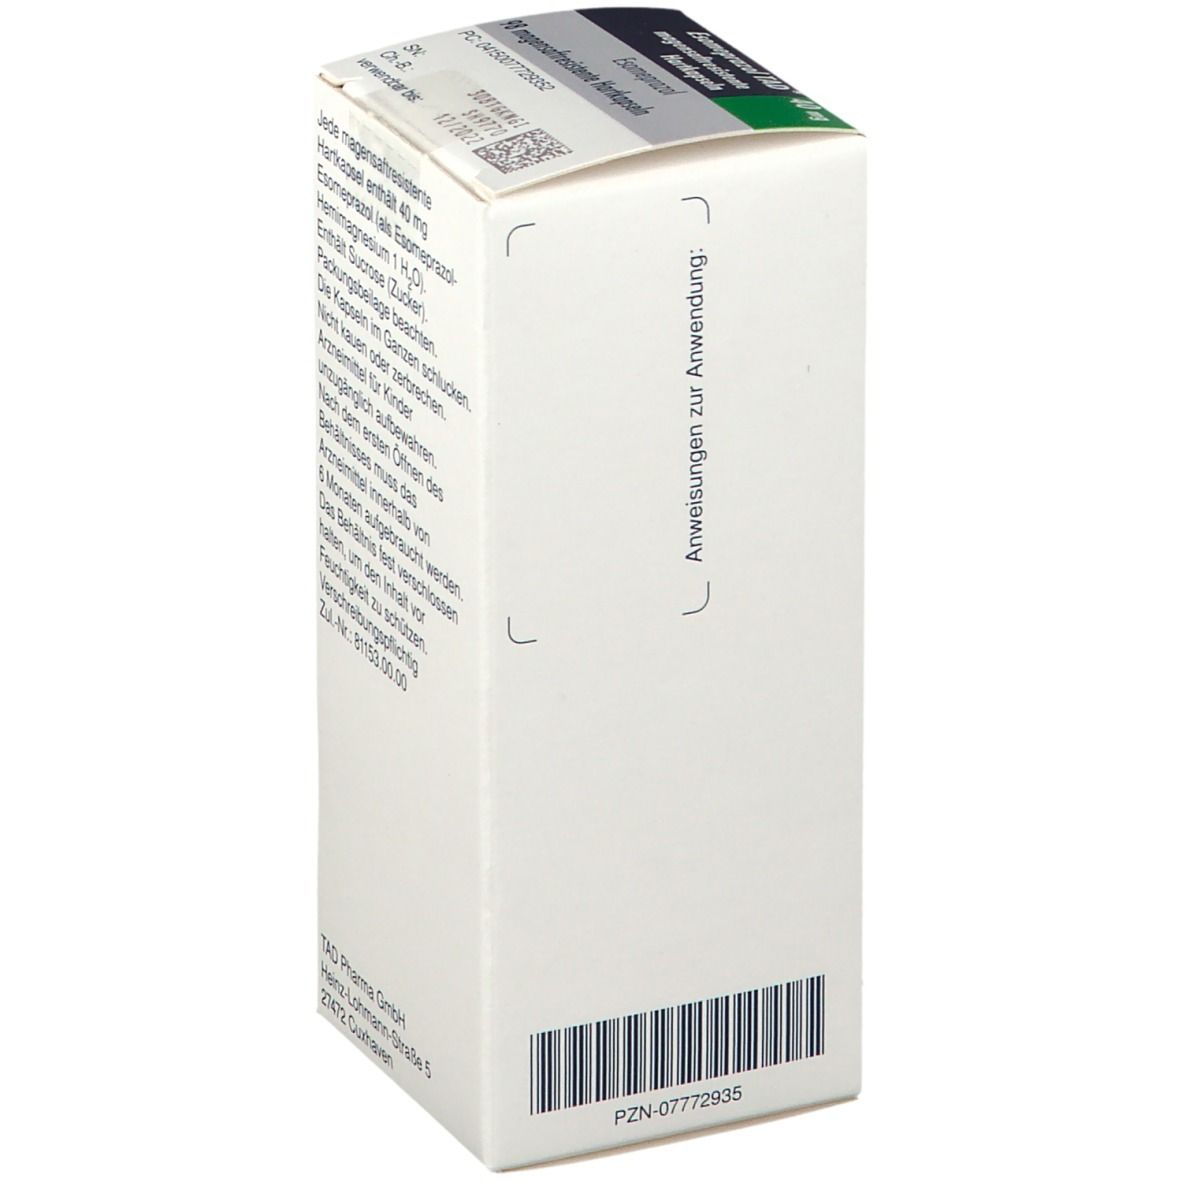 Esomeprazol® TAD 40 mg